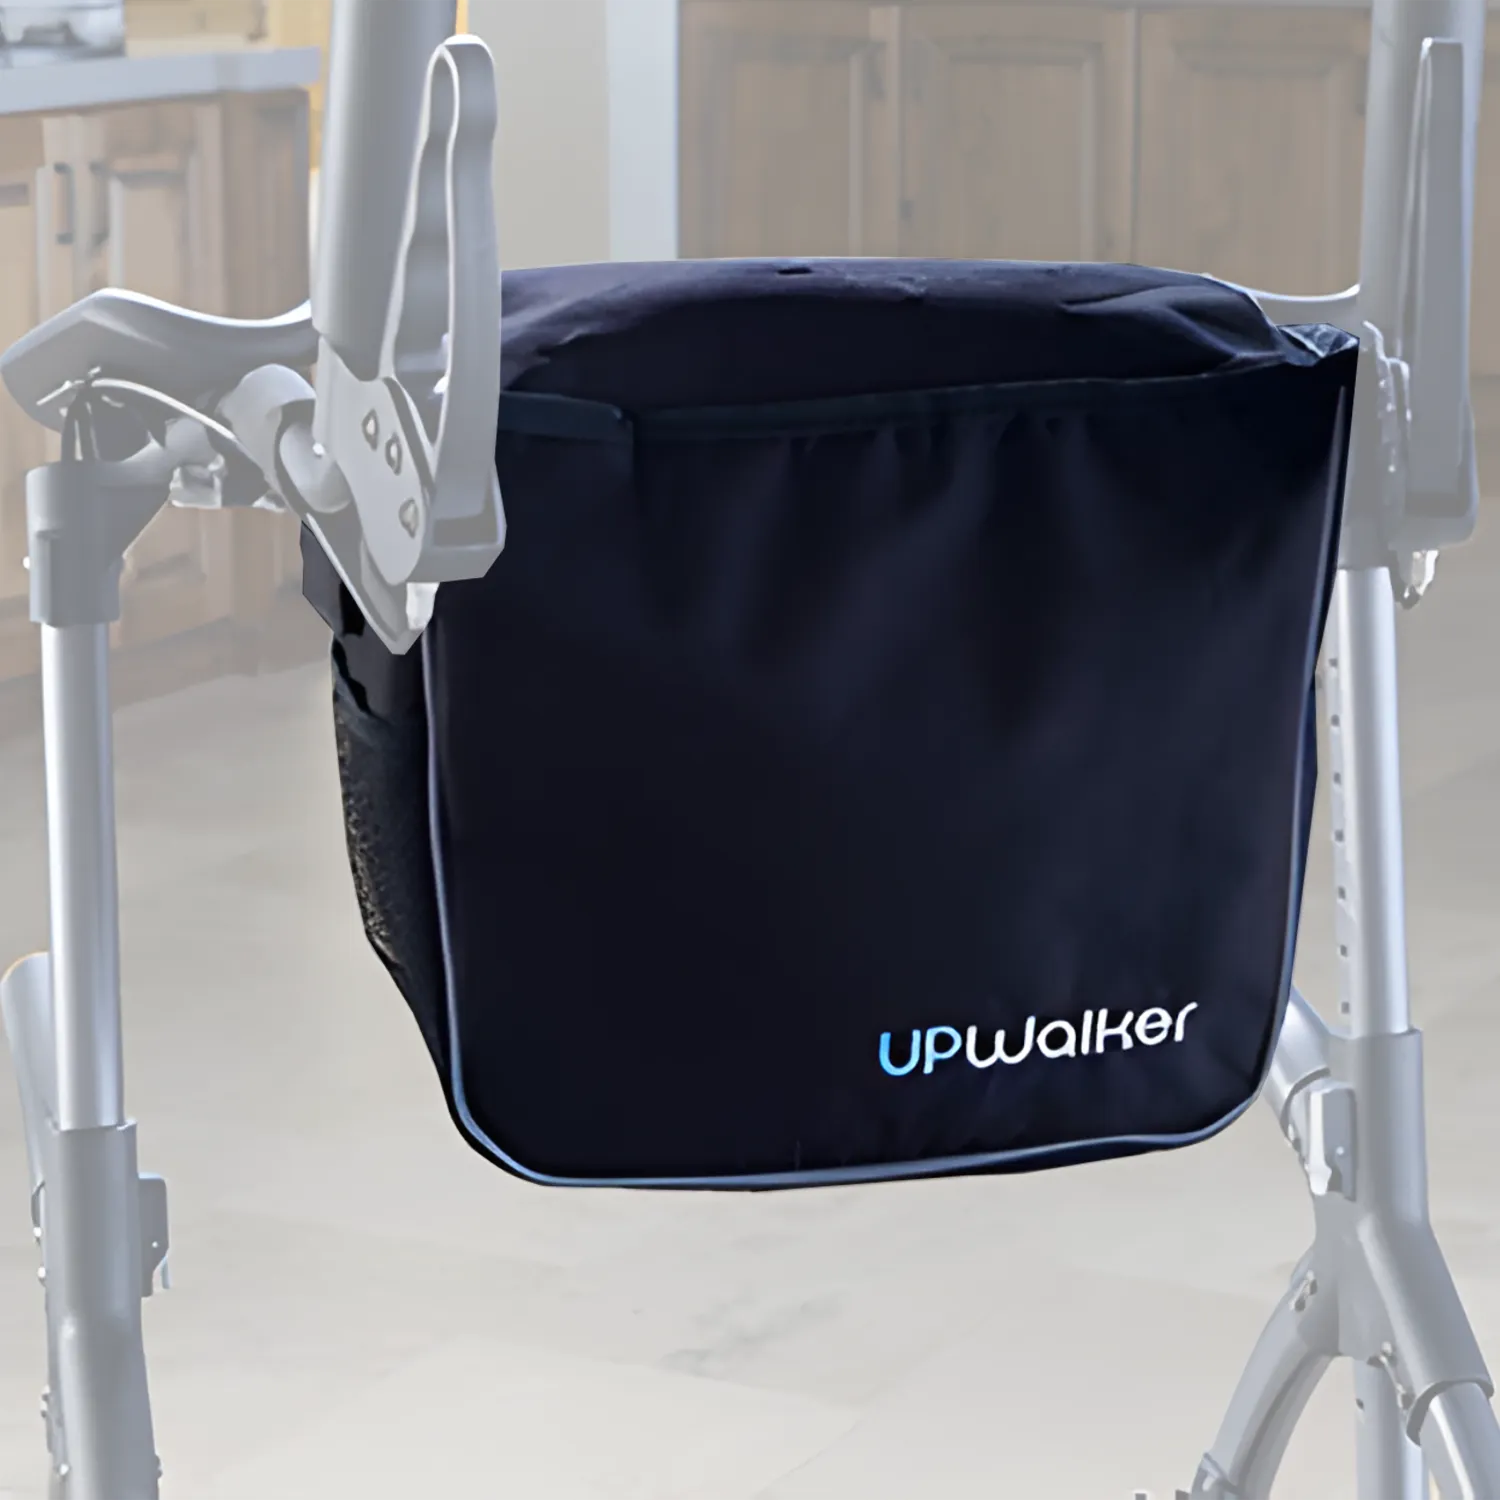 Upwalker Std,Lrg,Neuro,Cardio- Luxury Personal Bag